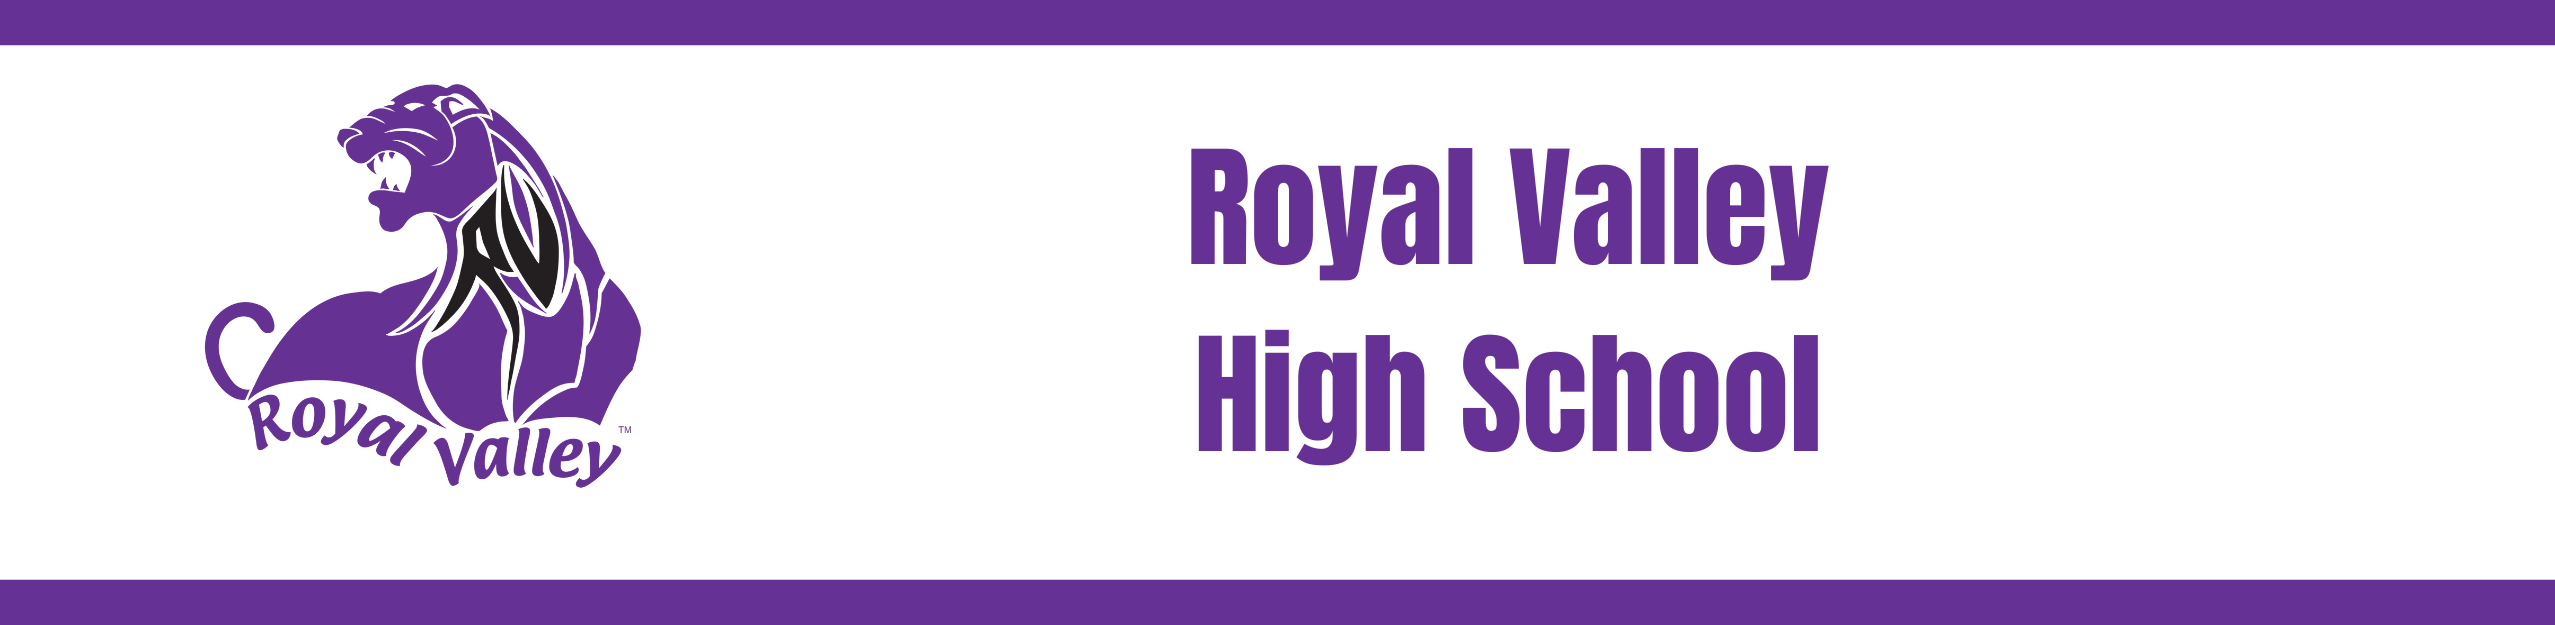 Royal Valley High School 